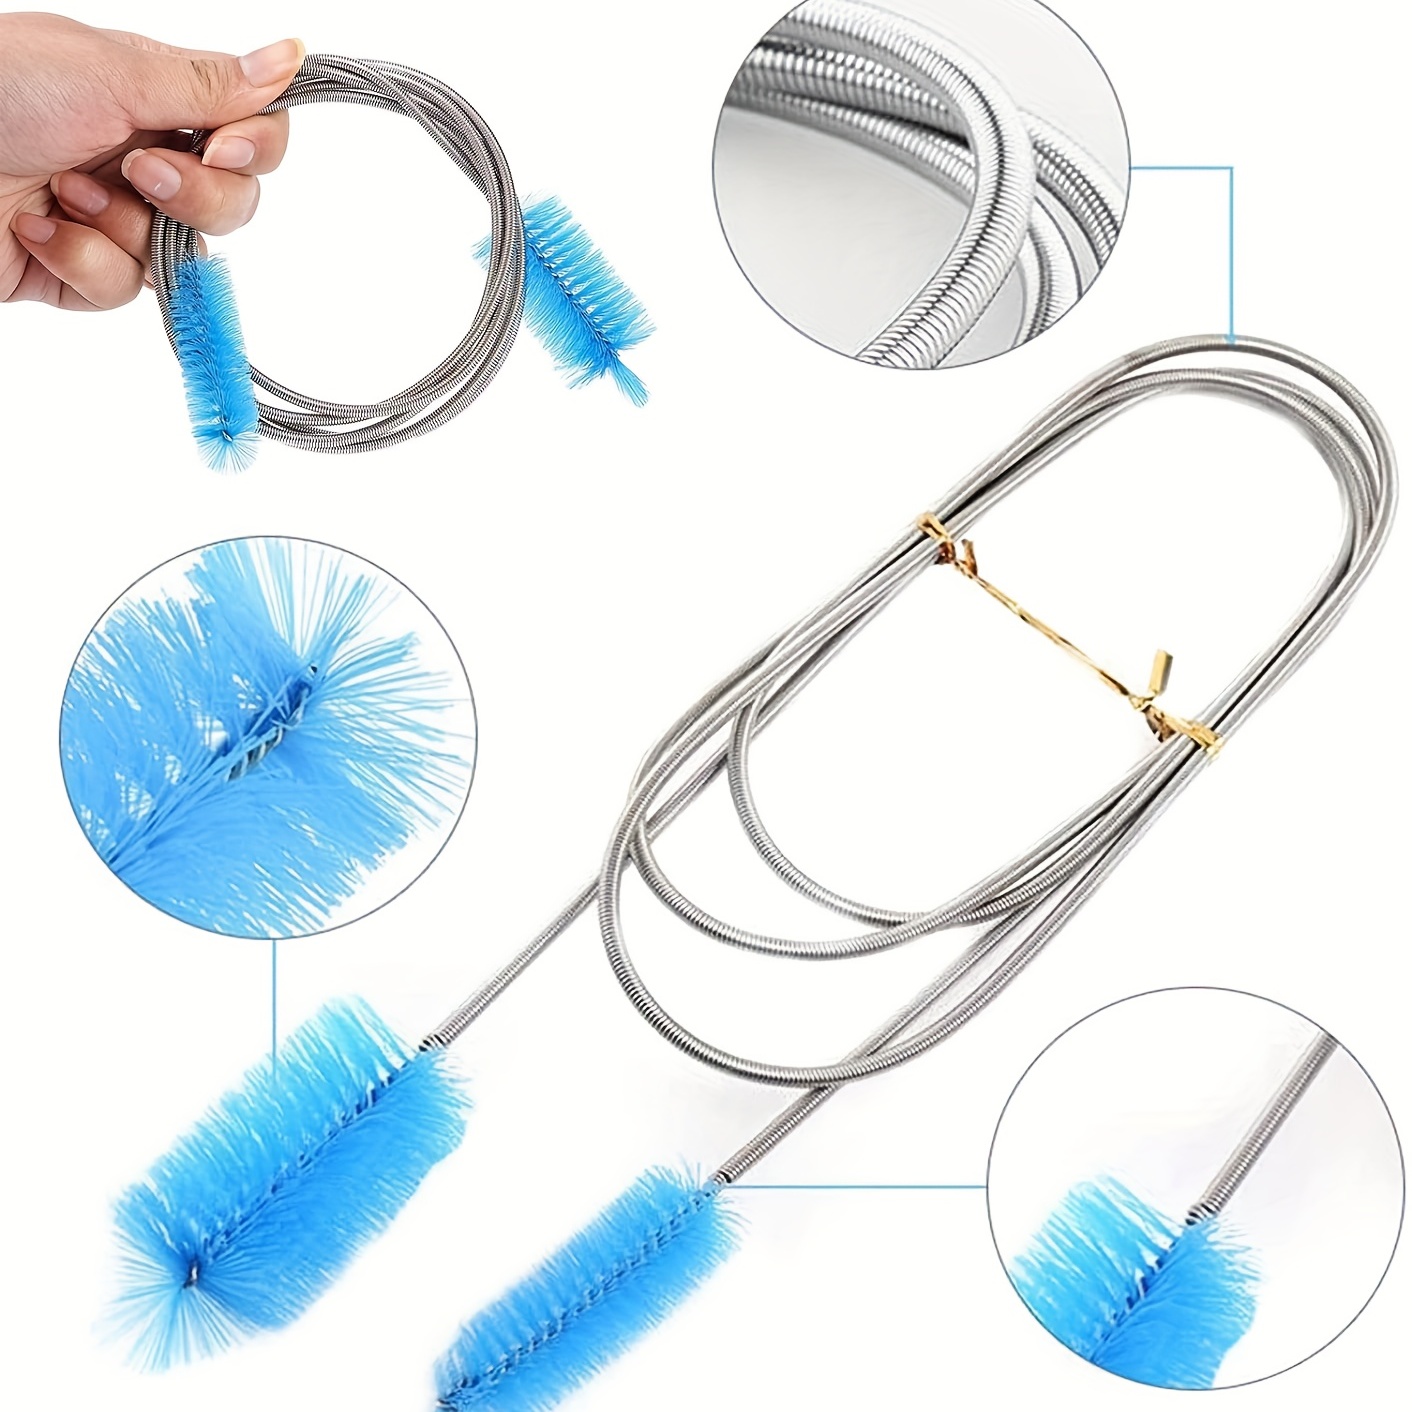 Flexible Drain Brush-Extra Long Nylon Cleaner for Cleaning Plumbing Sink  Fridge Skinny Pipe Air Tube Hose Dredging Tool 143cm/56 inch (1 PCS)